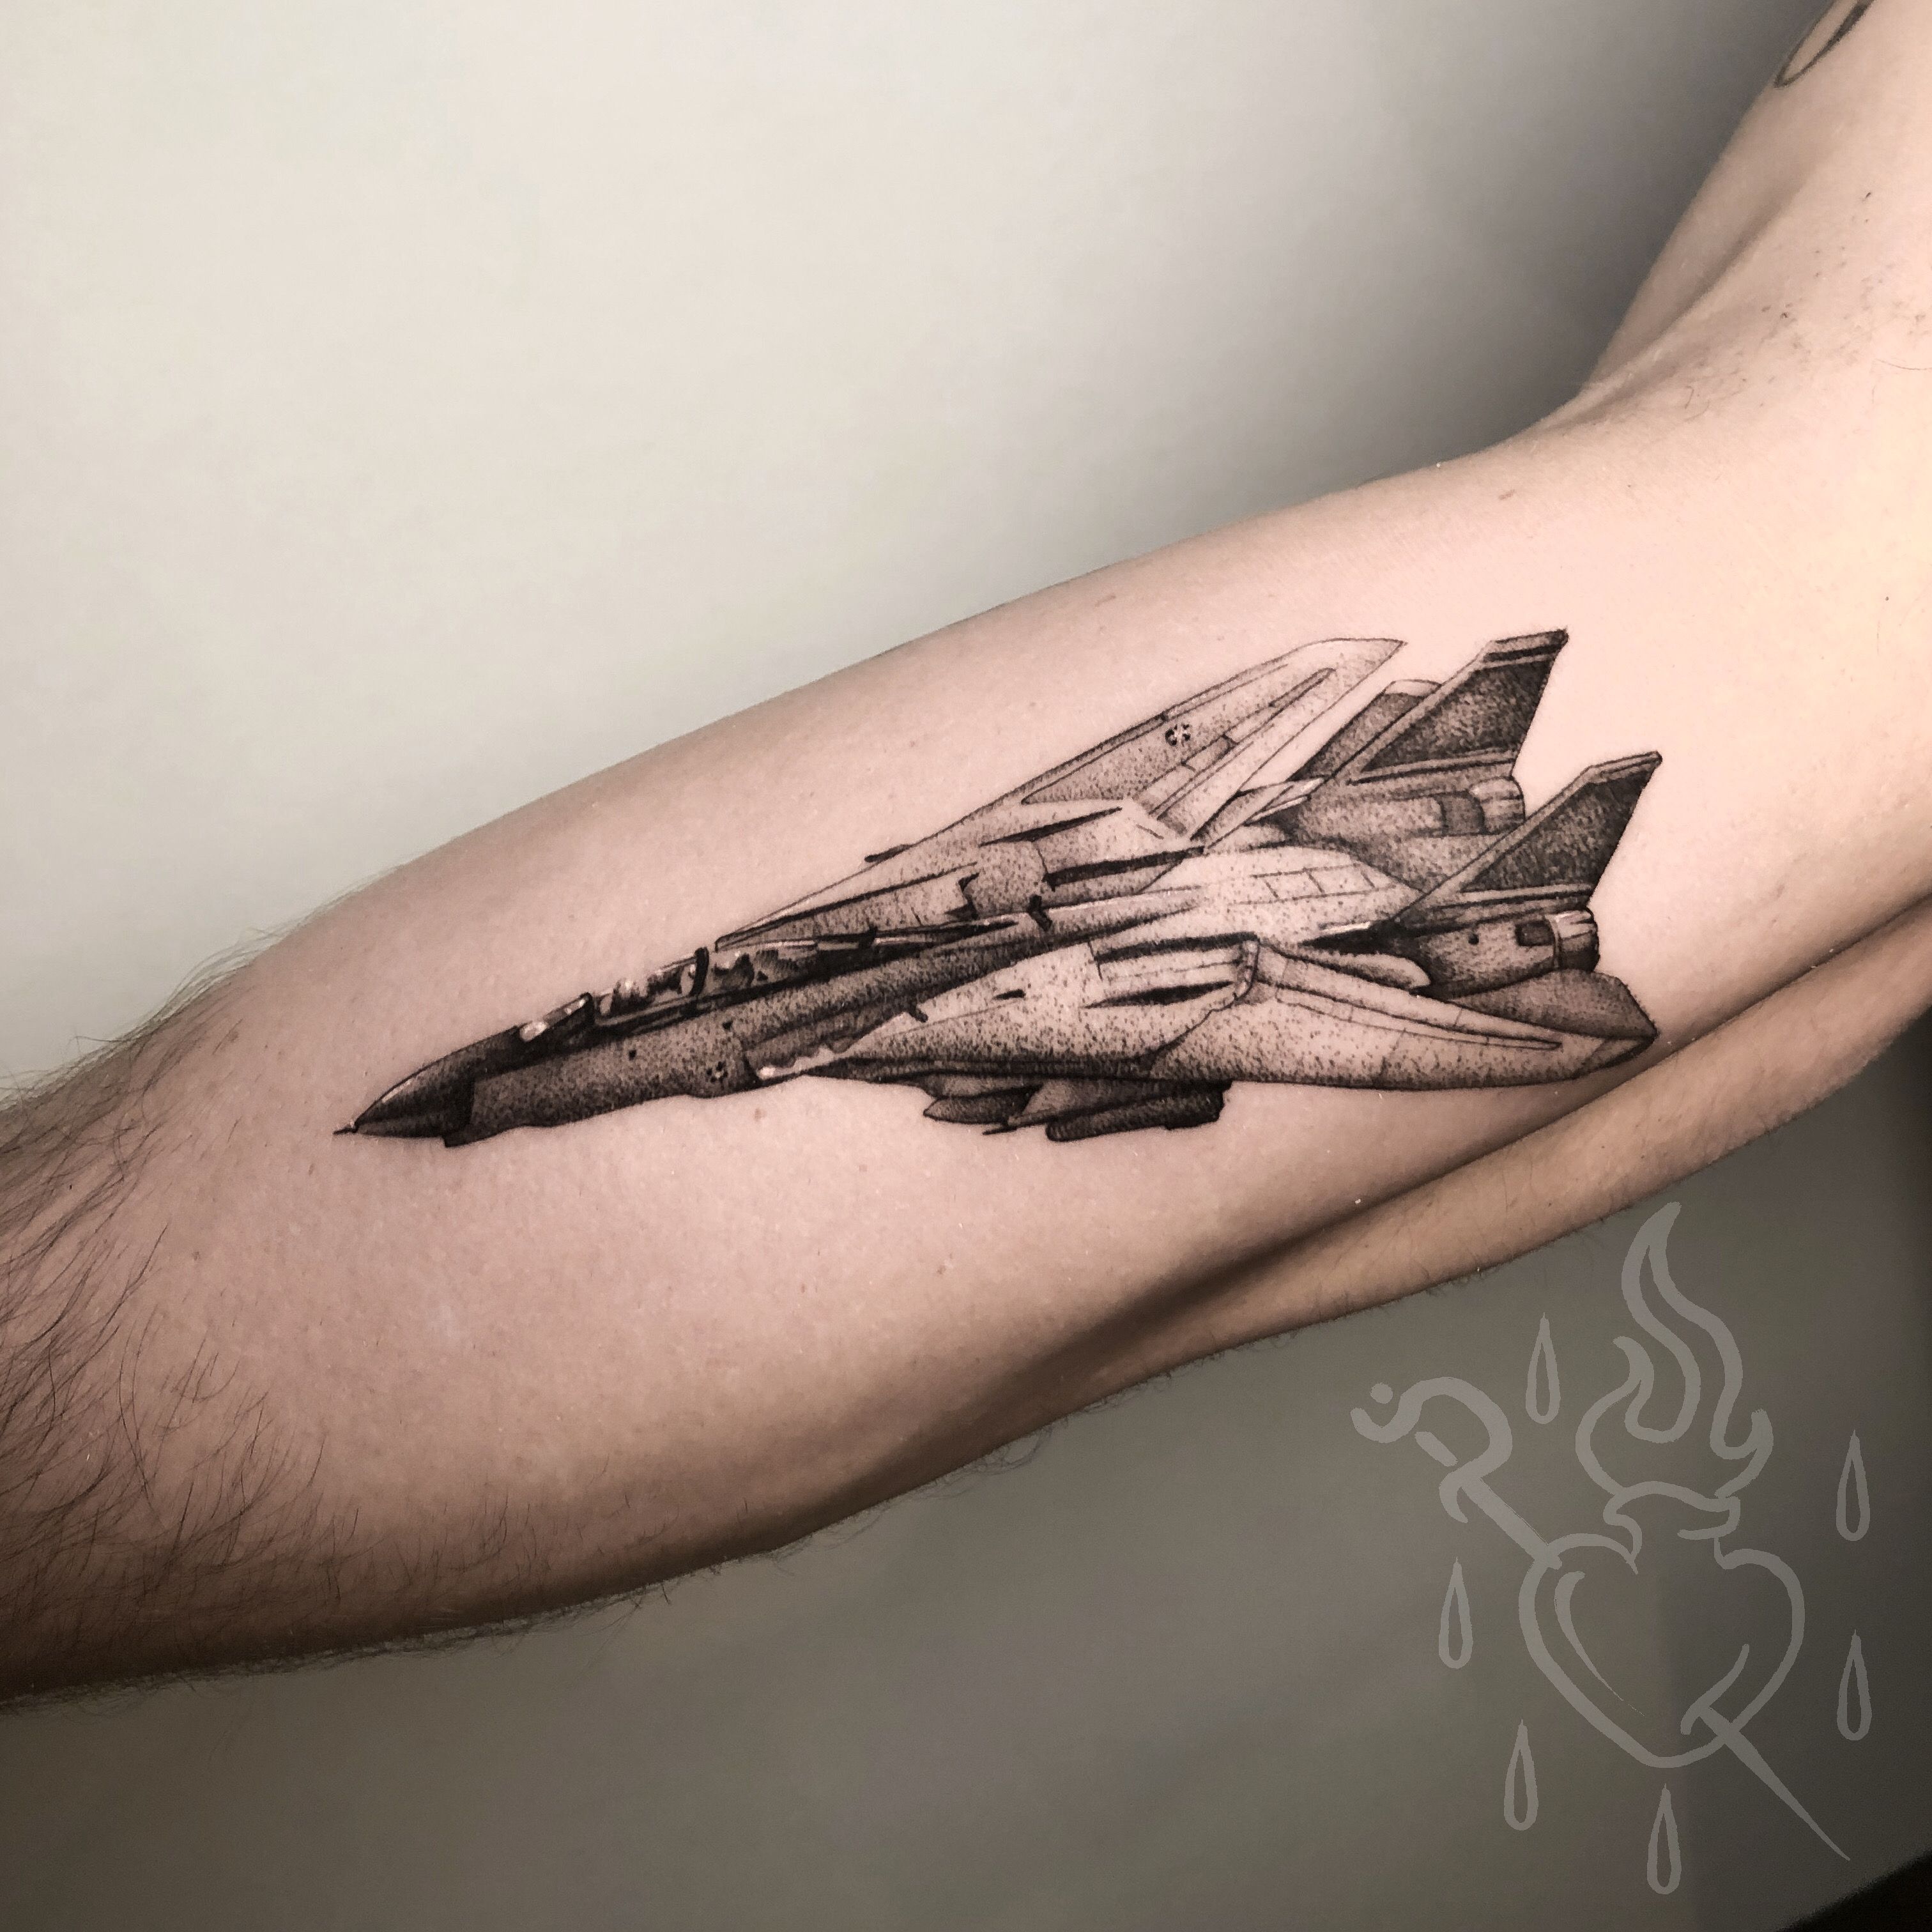 Su-27 Fighter Jet | Sleeve Tattoos